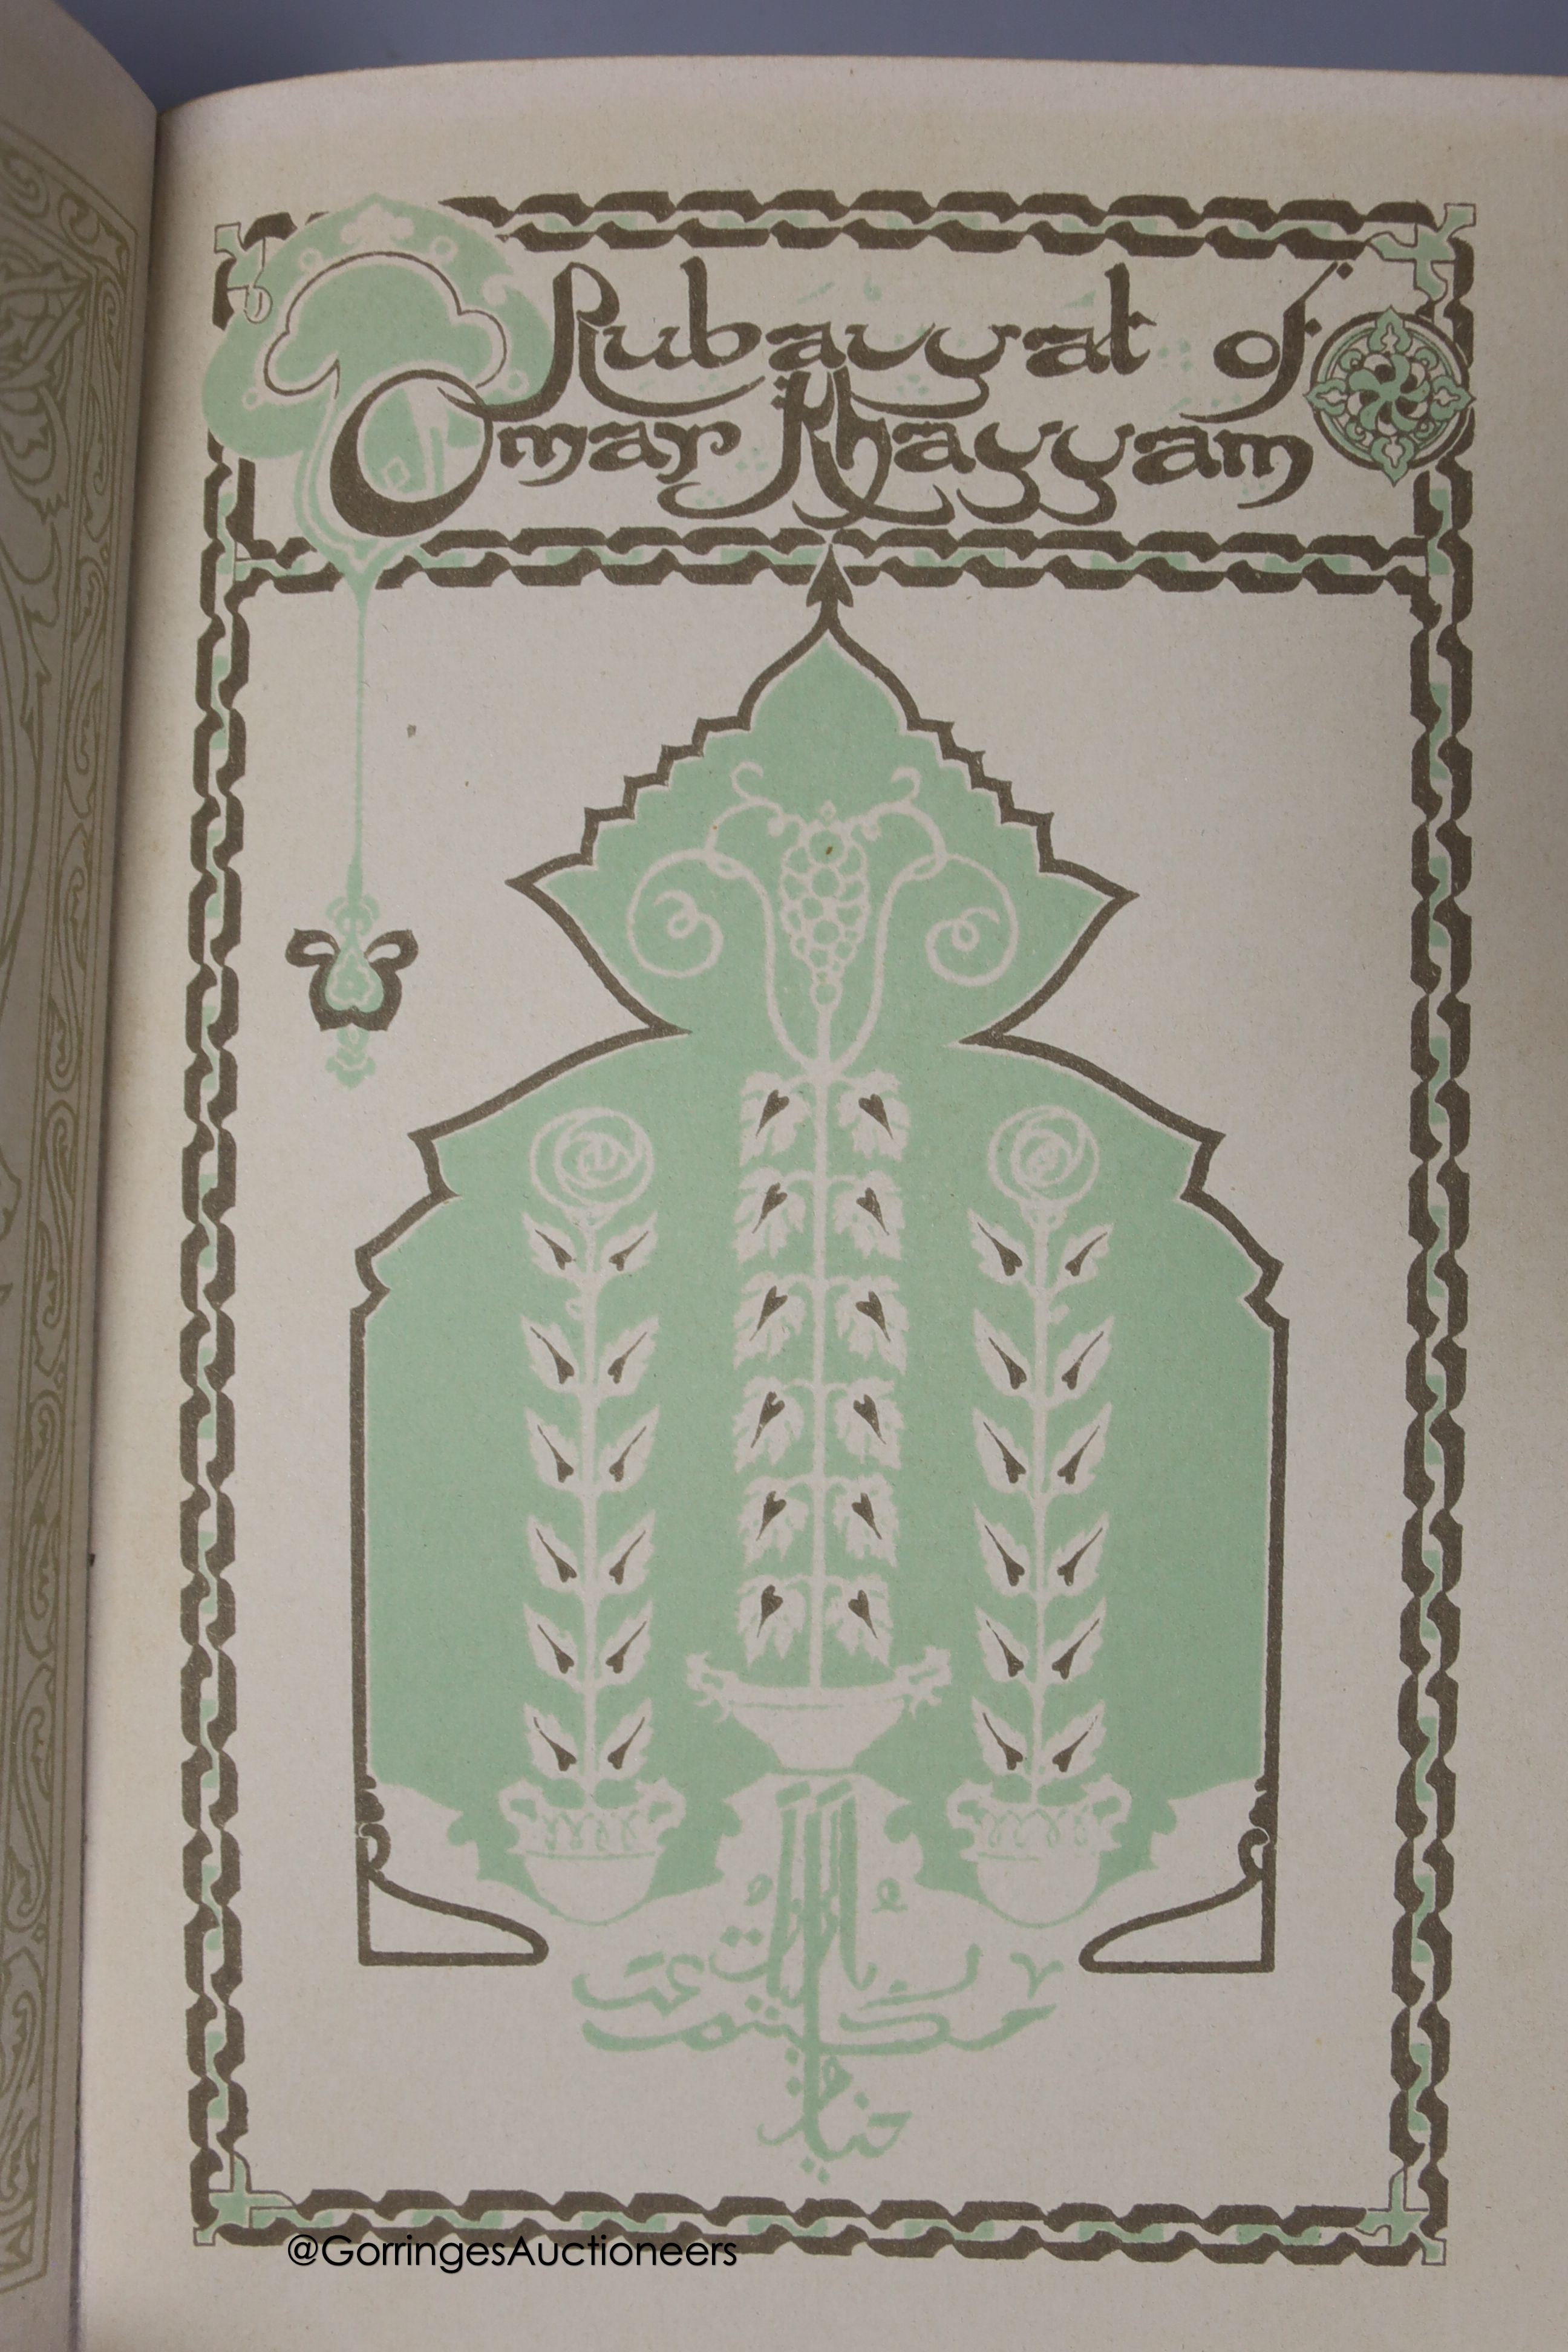 Rubaiyat of Omar Rhayyan